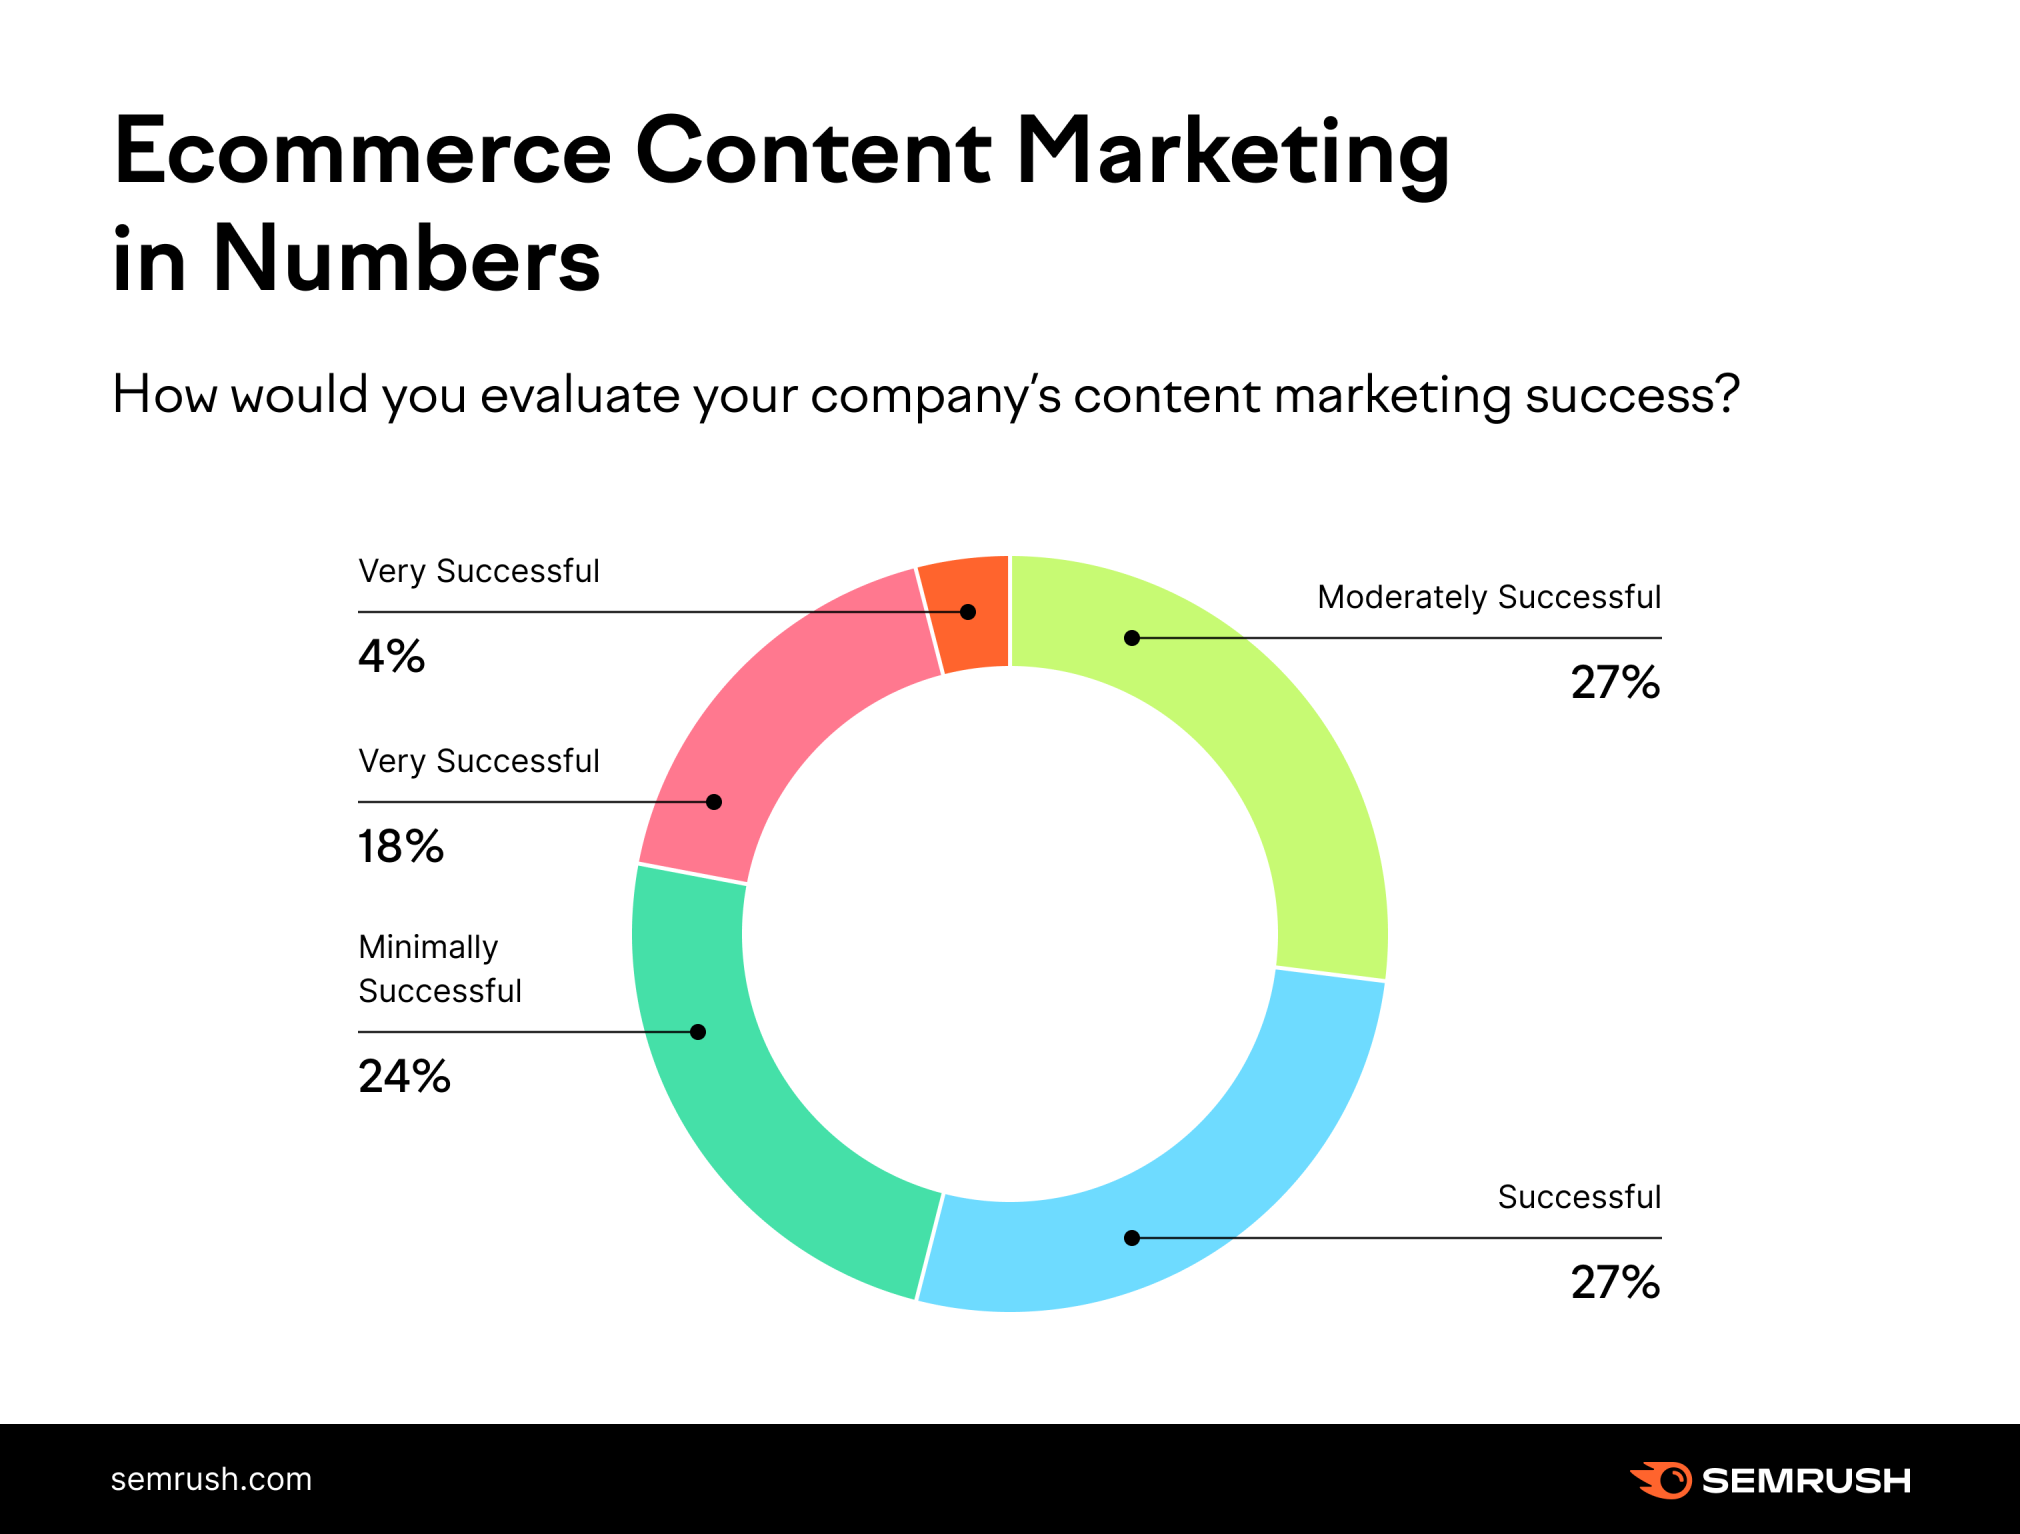 Content marketing for e-commerce